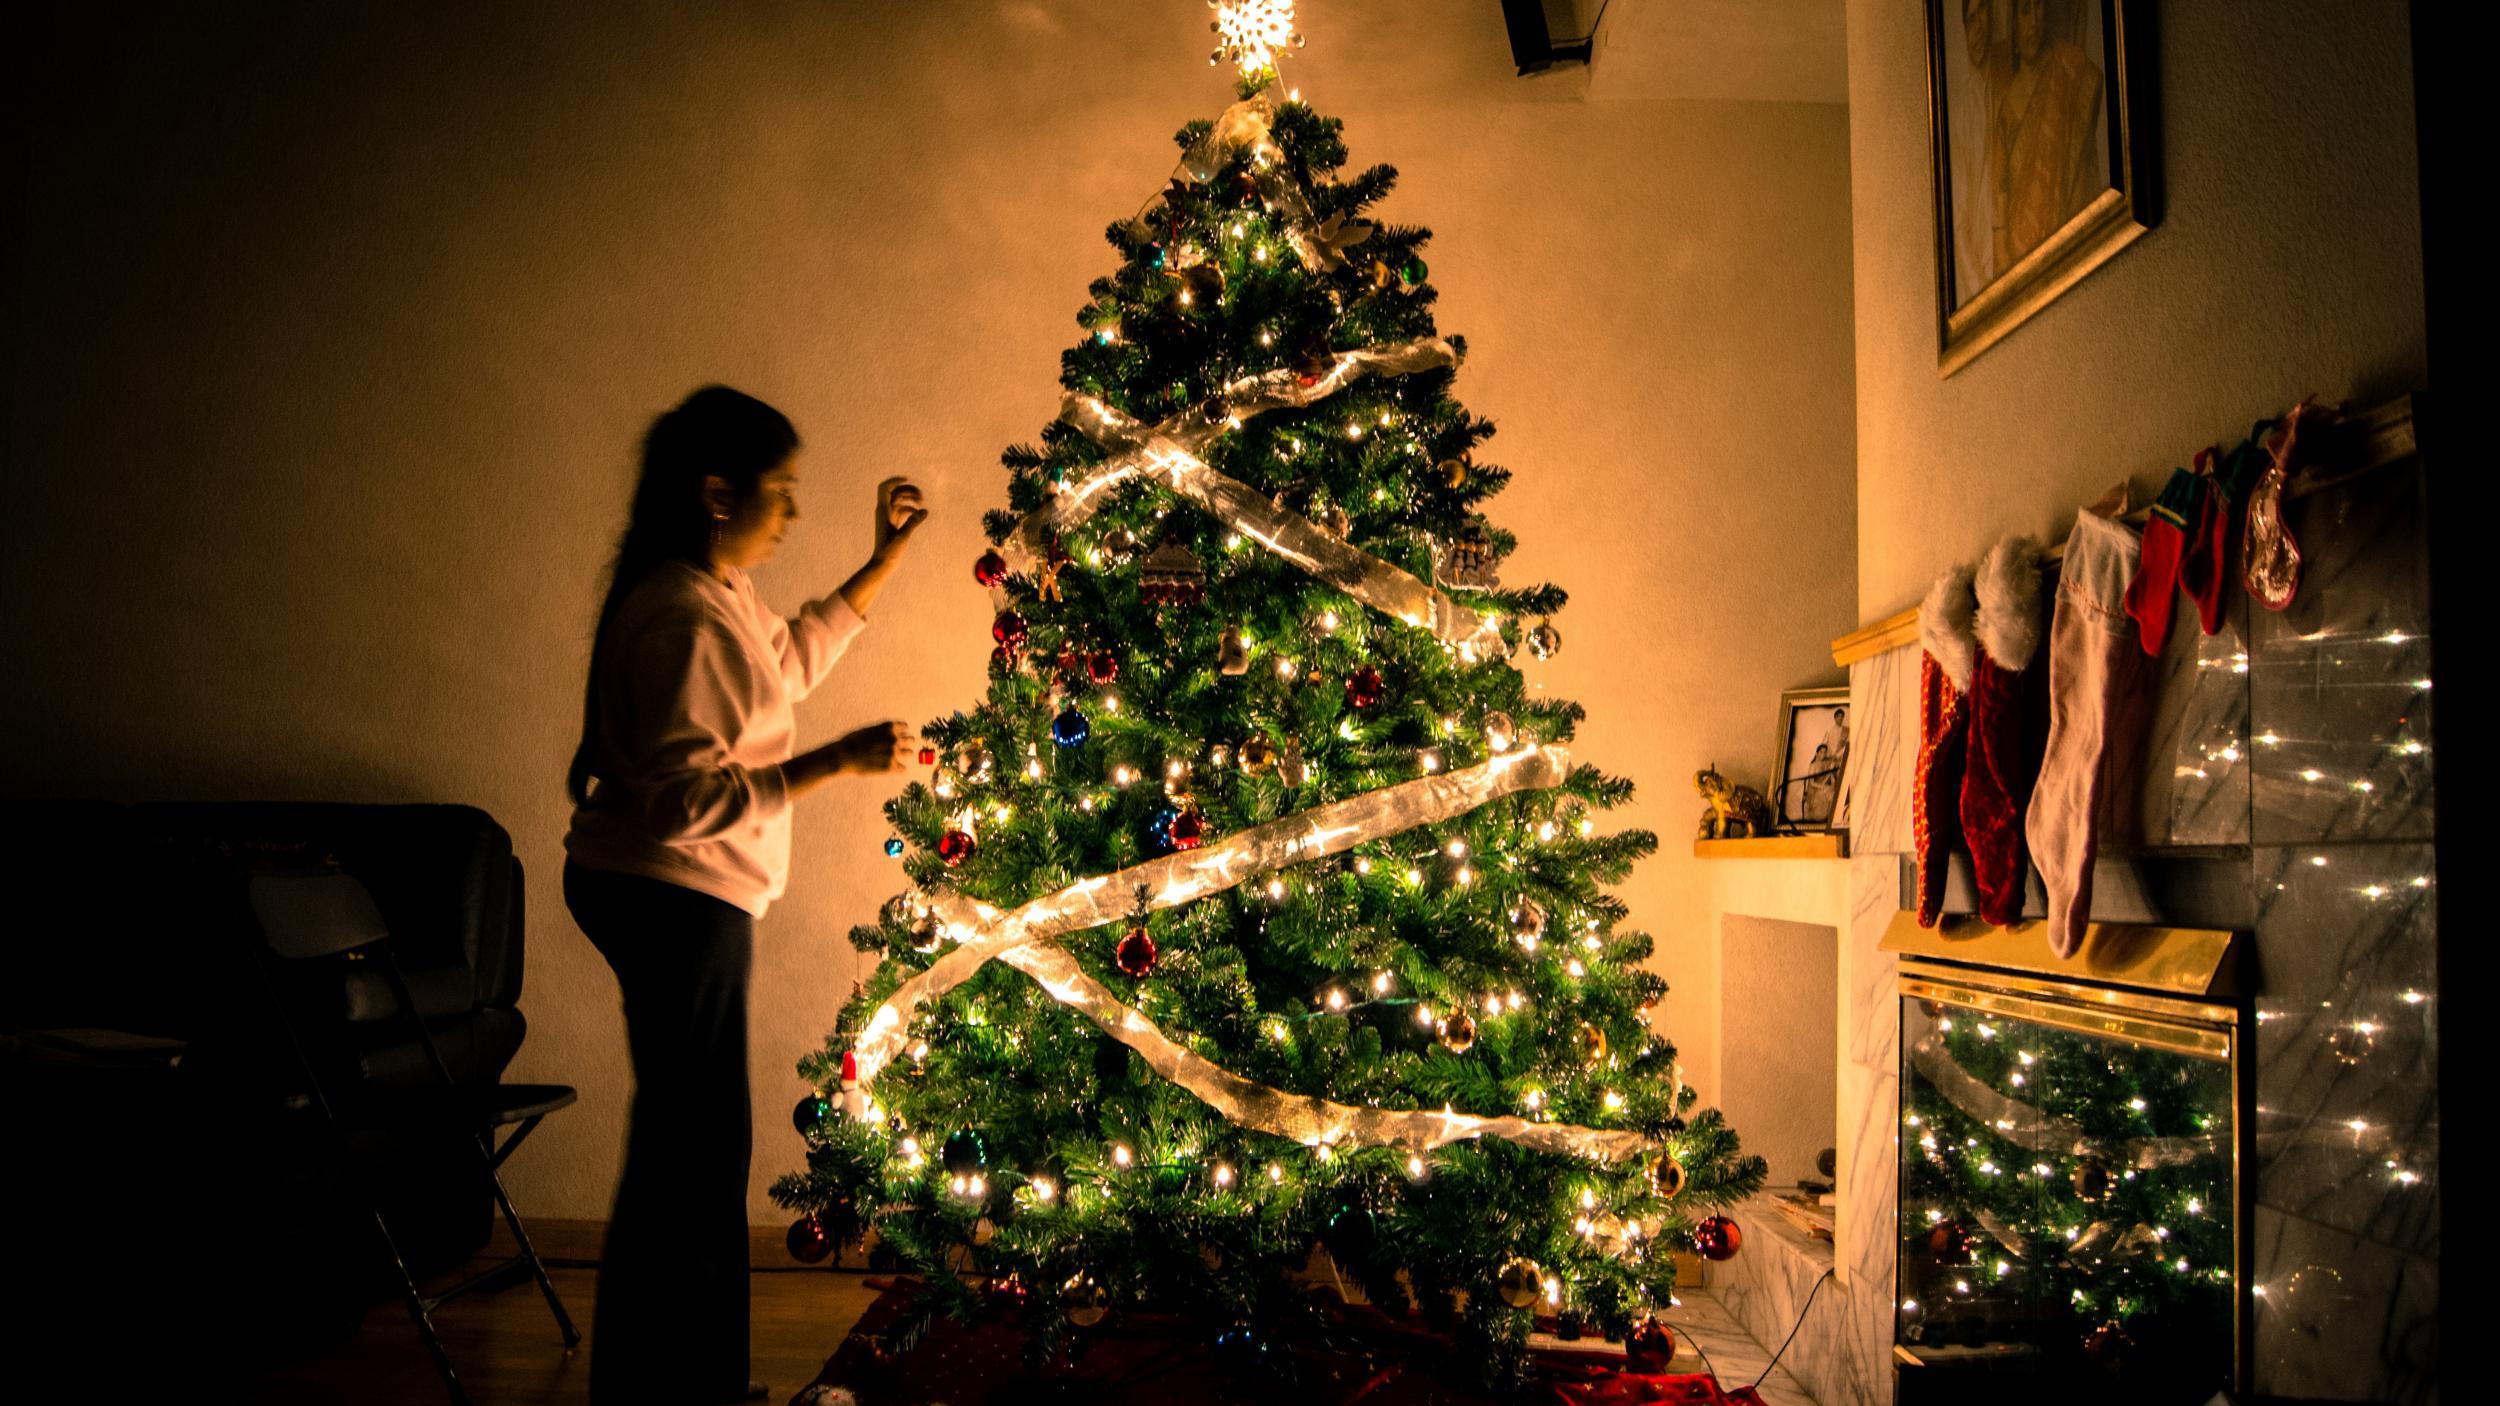 How to correctly dress Christmas tree lights, according to 